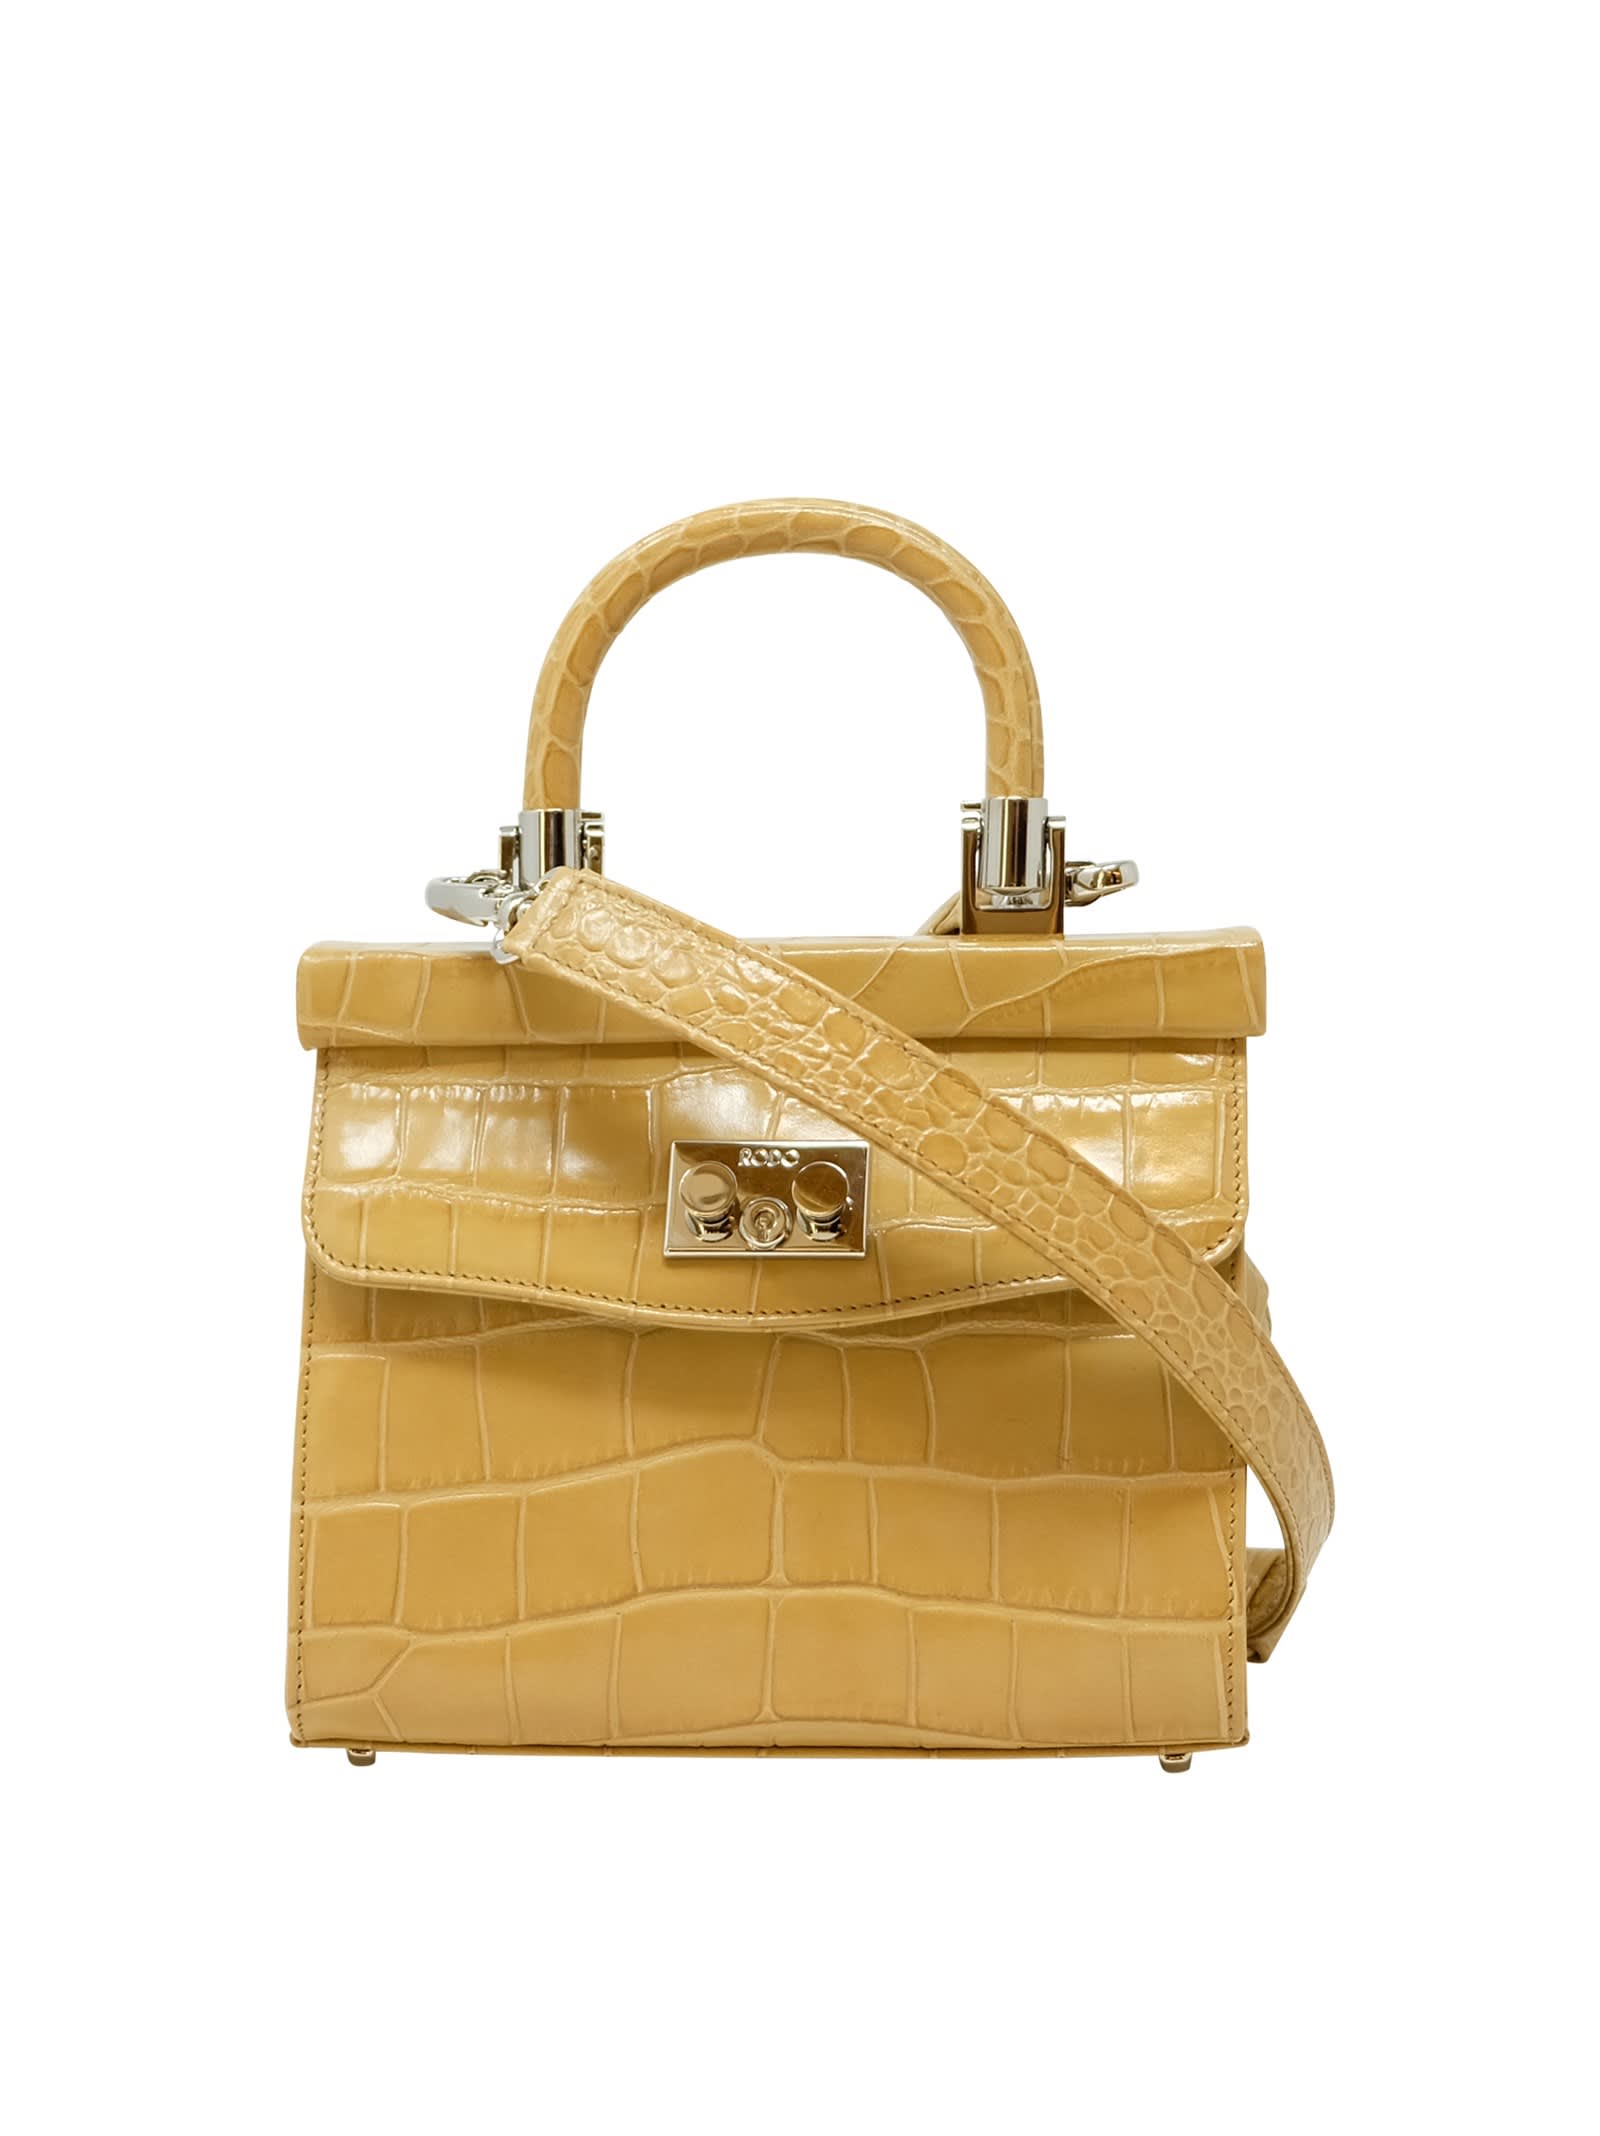 Sahara Croco Leather Paris Handbag